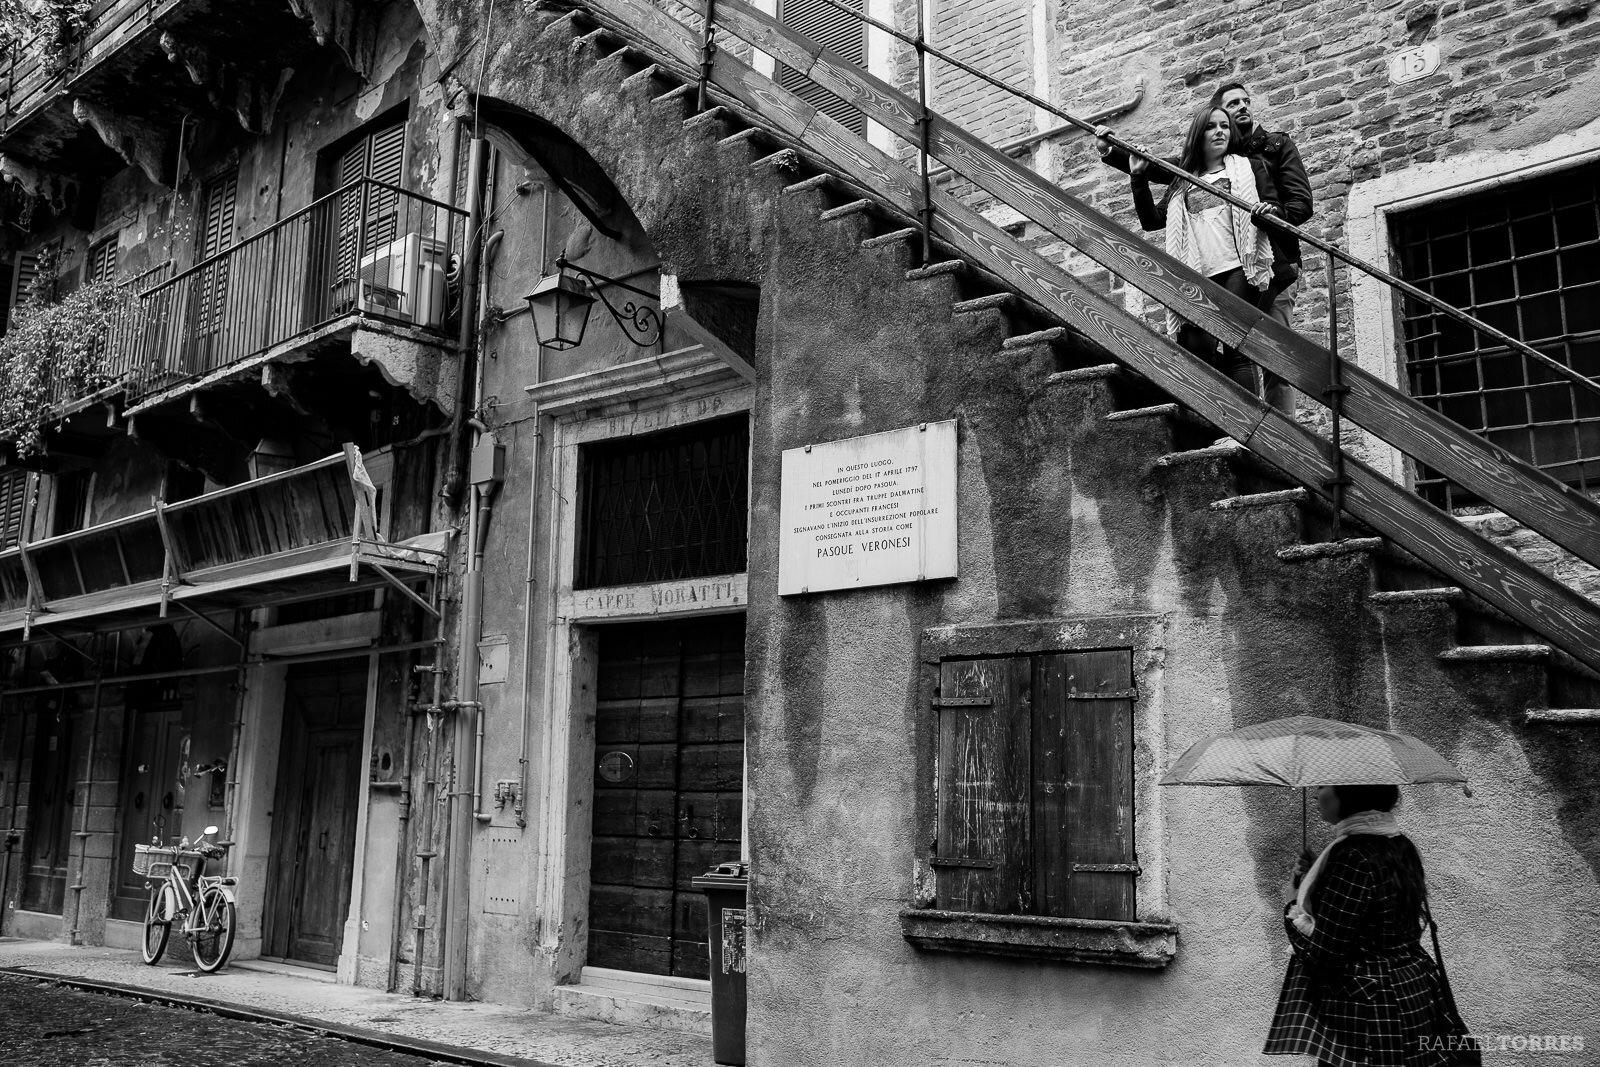 Venecia-burano-murano-verona-rafael-torres-photo-italia-fotografo--356.jpg